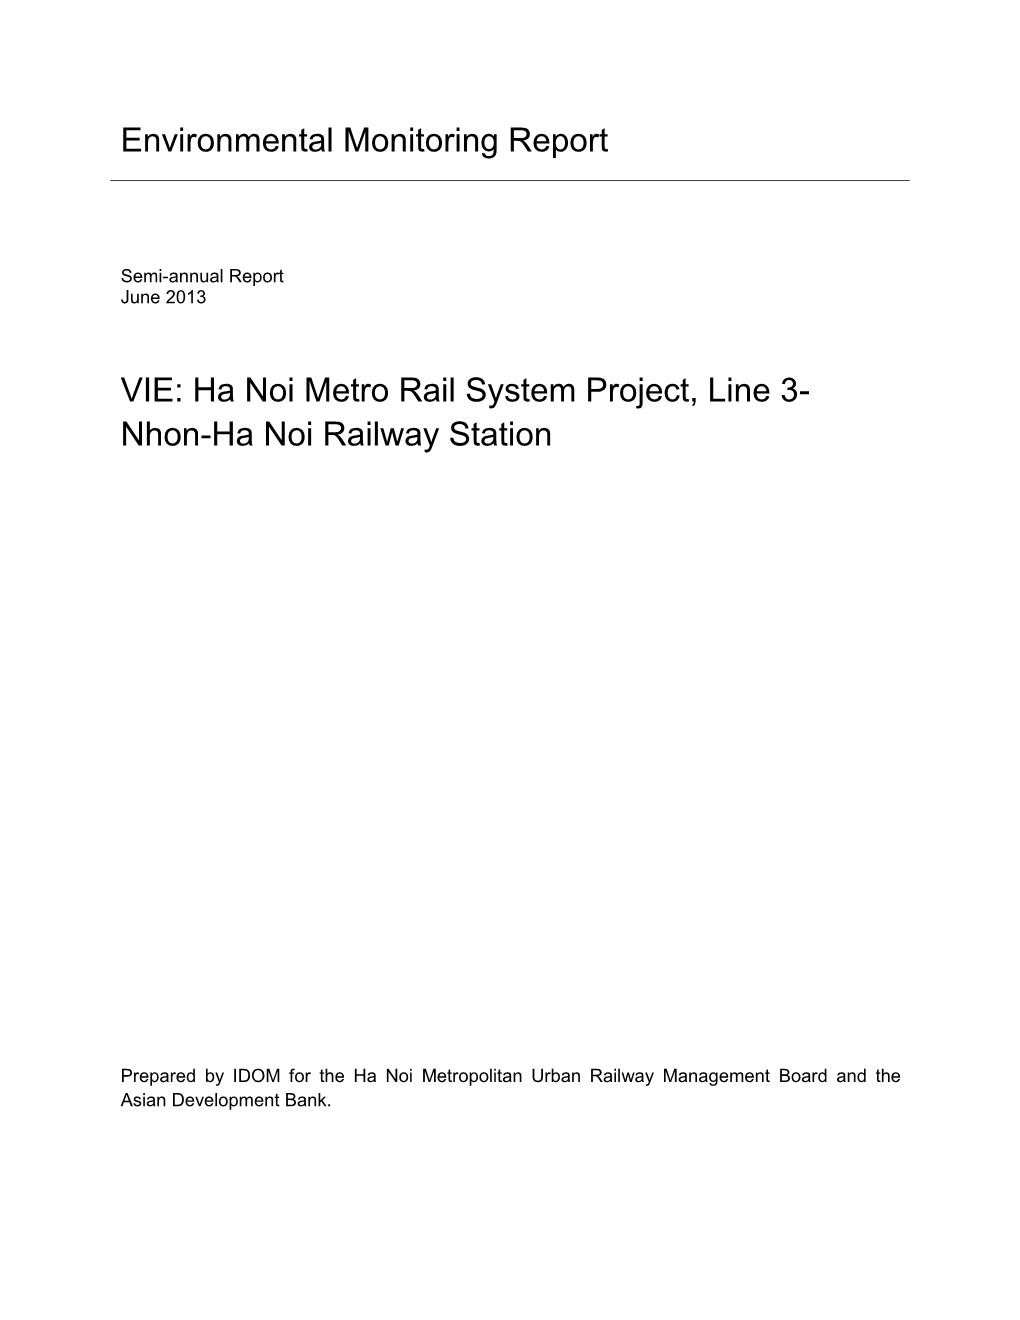 Ha Noi Metro Rail System Project, Line 3-Nhon-Ha Noi Railway